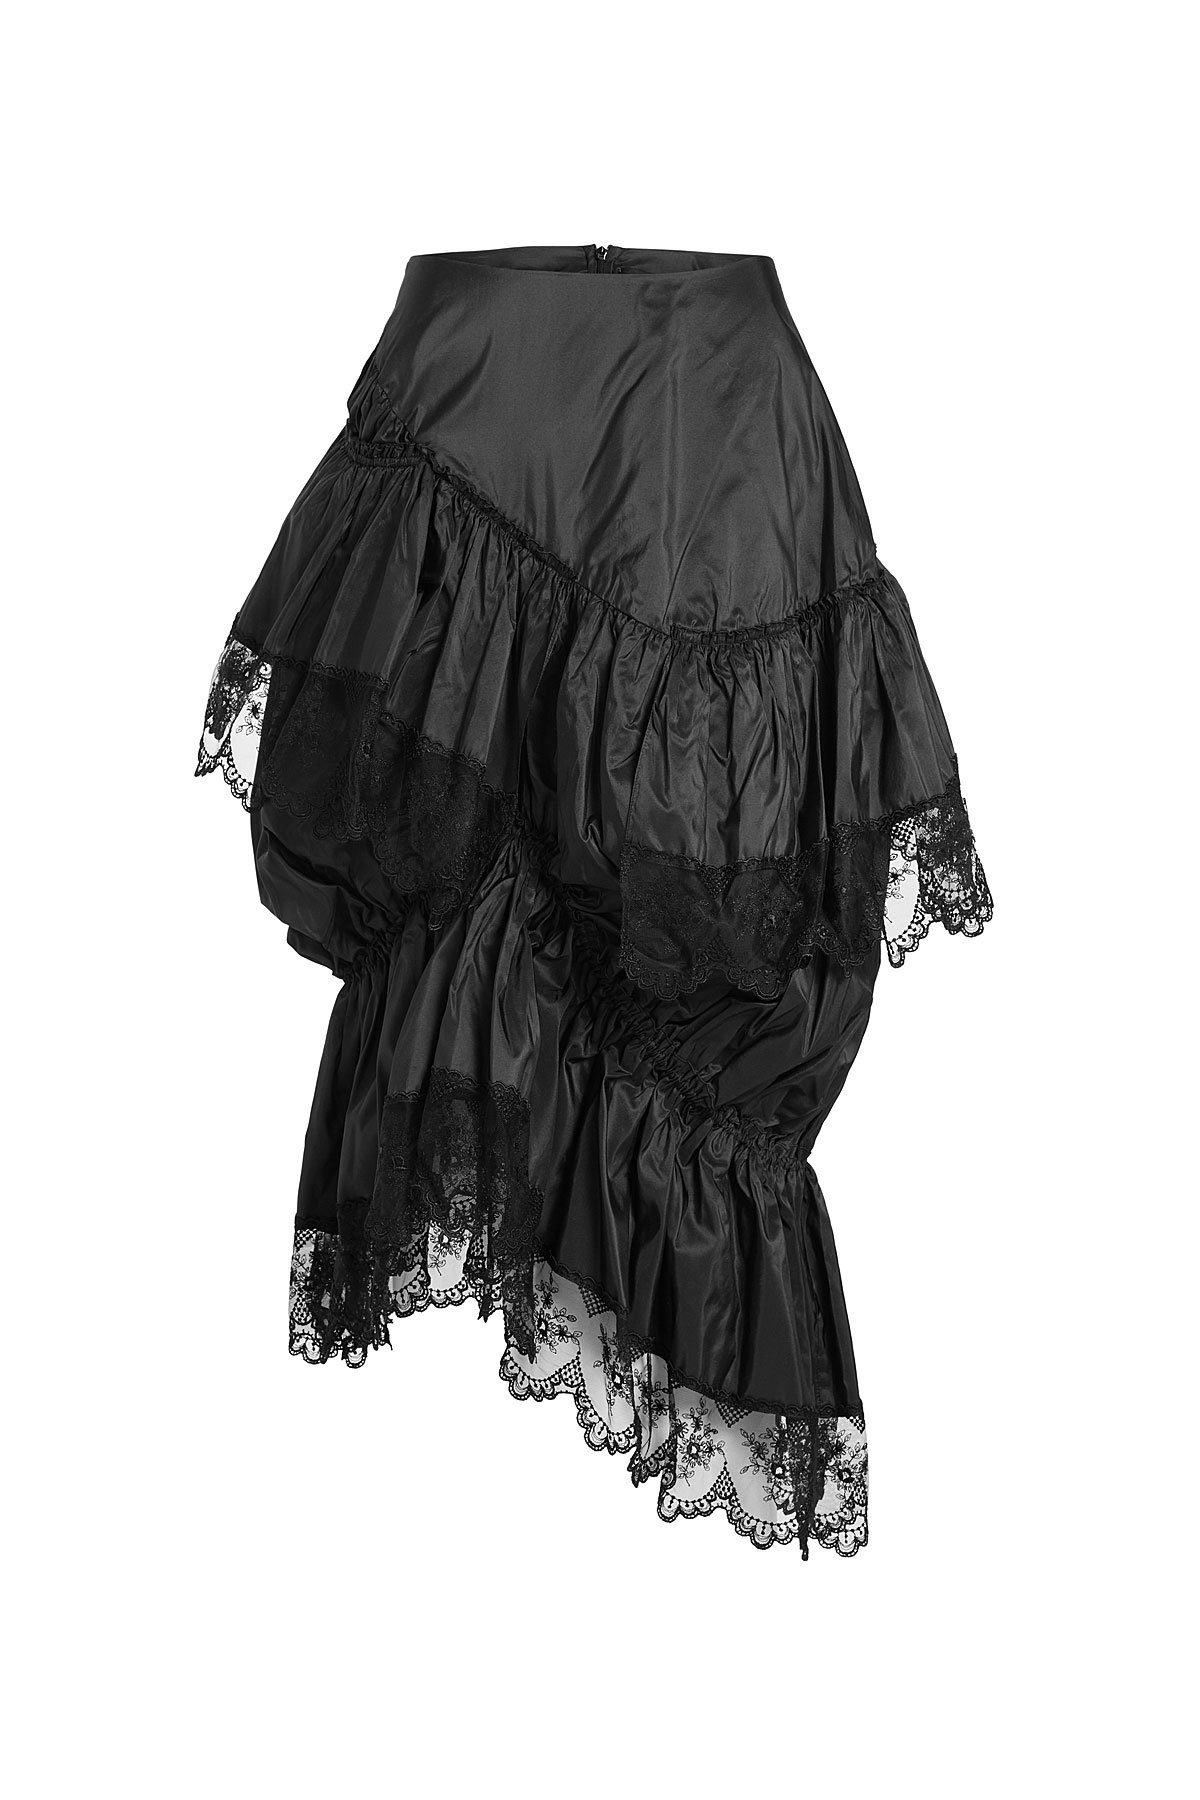 Simone Rocha - Silk Skirt with Lace